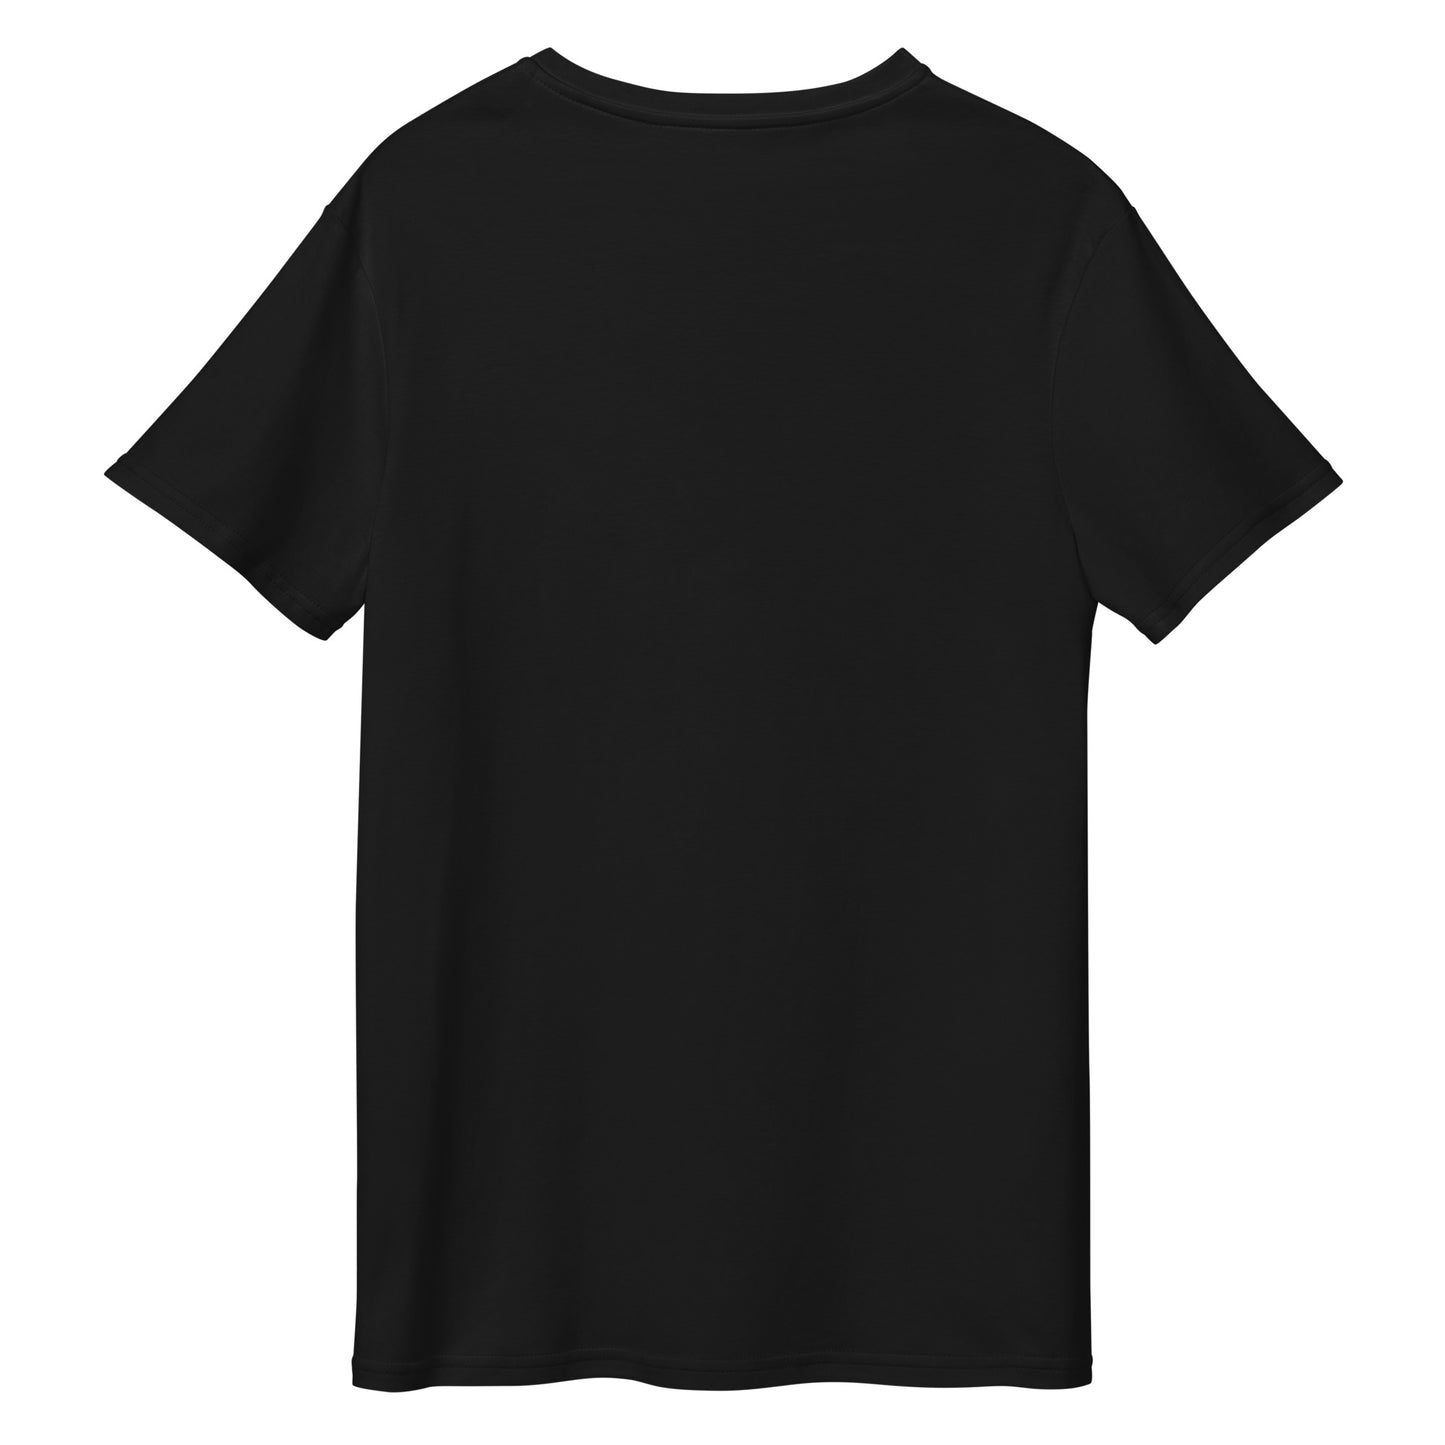 Digital Art: VZI C. - T-Shirt For Men's - Premium Cotton - Smart Casual, Streetwear, High-End Couture